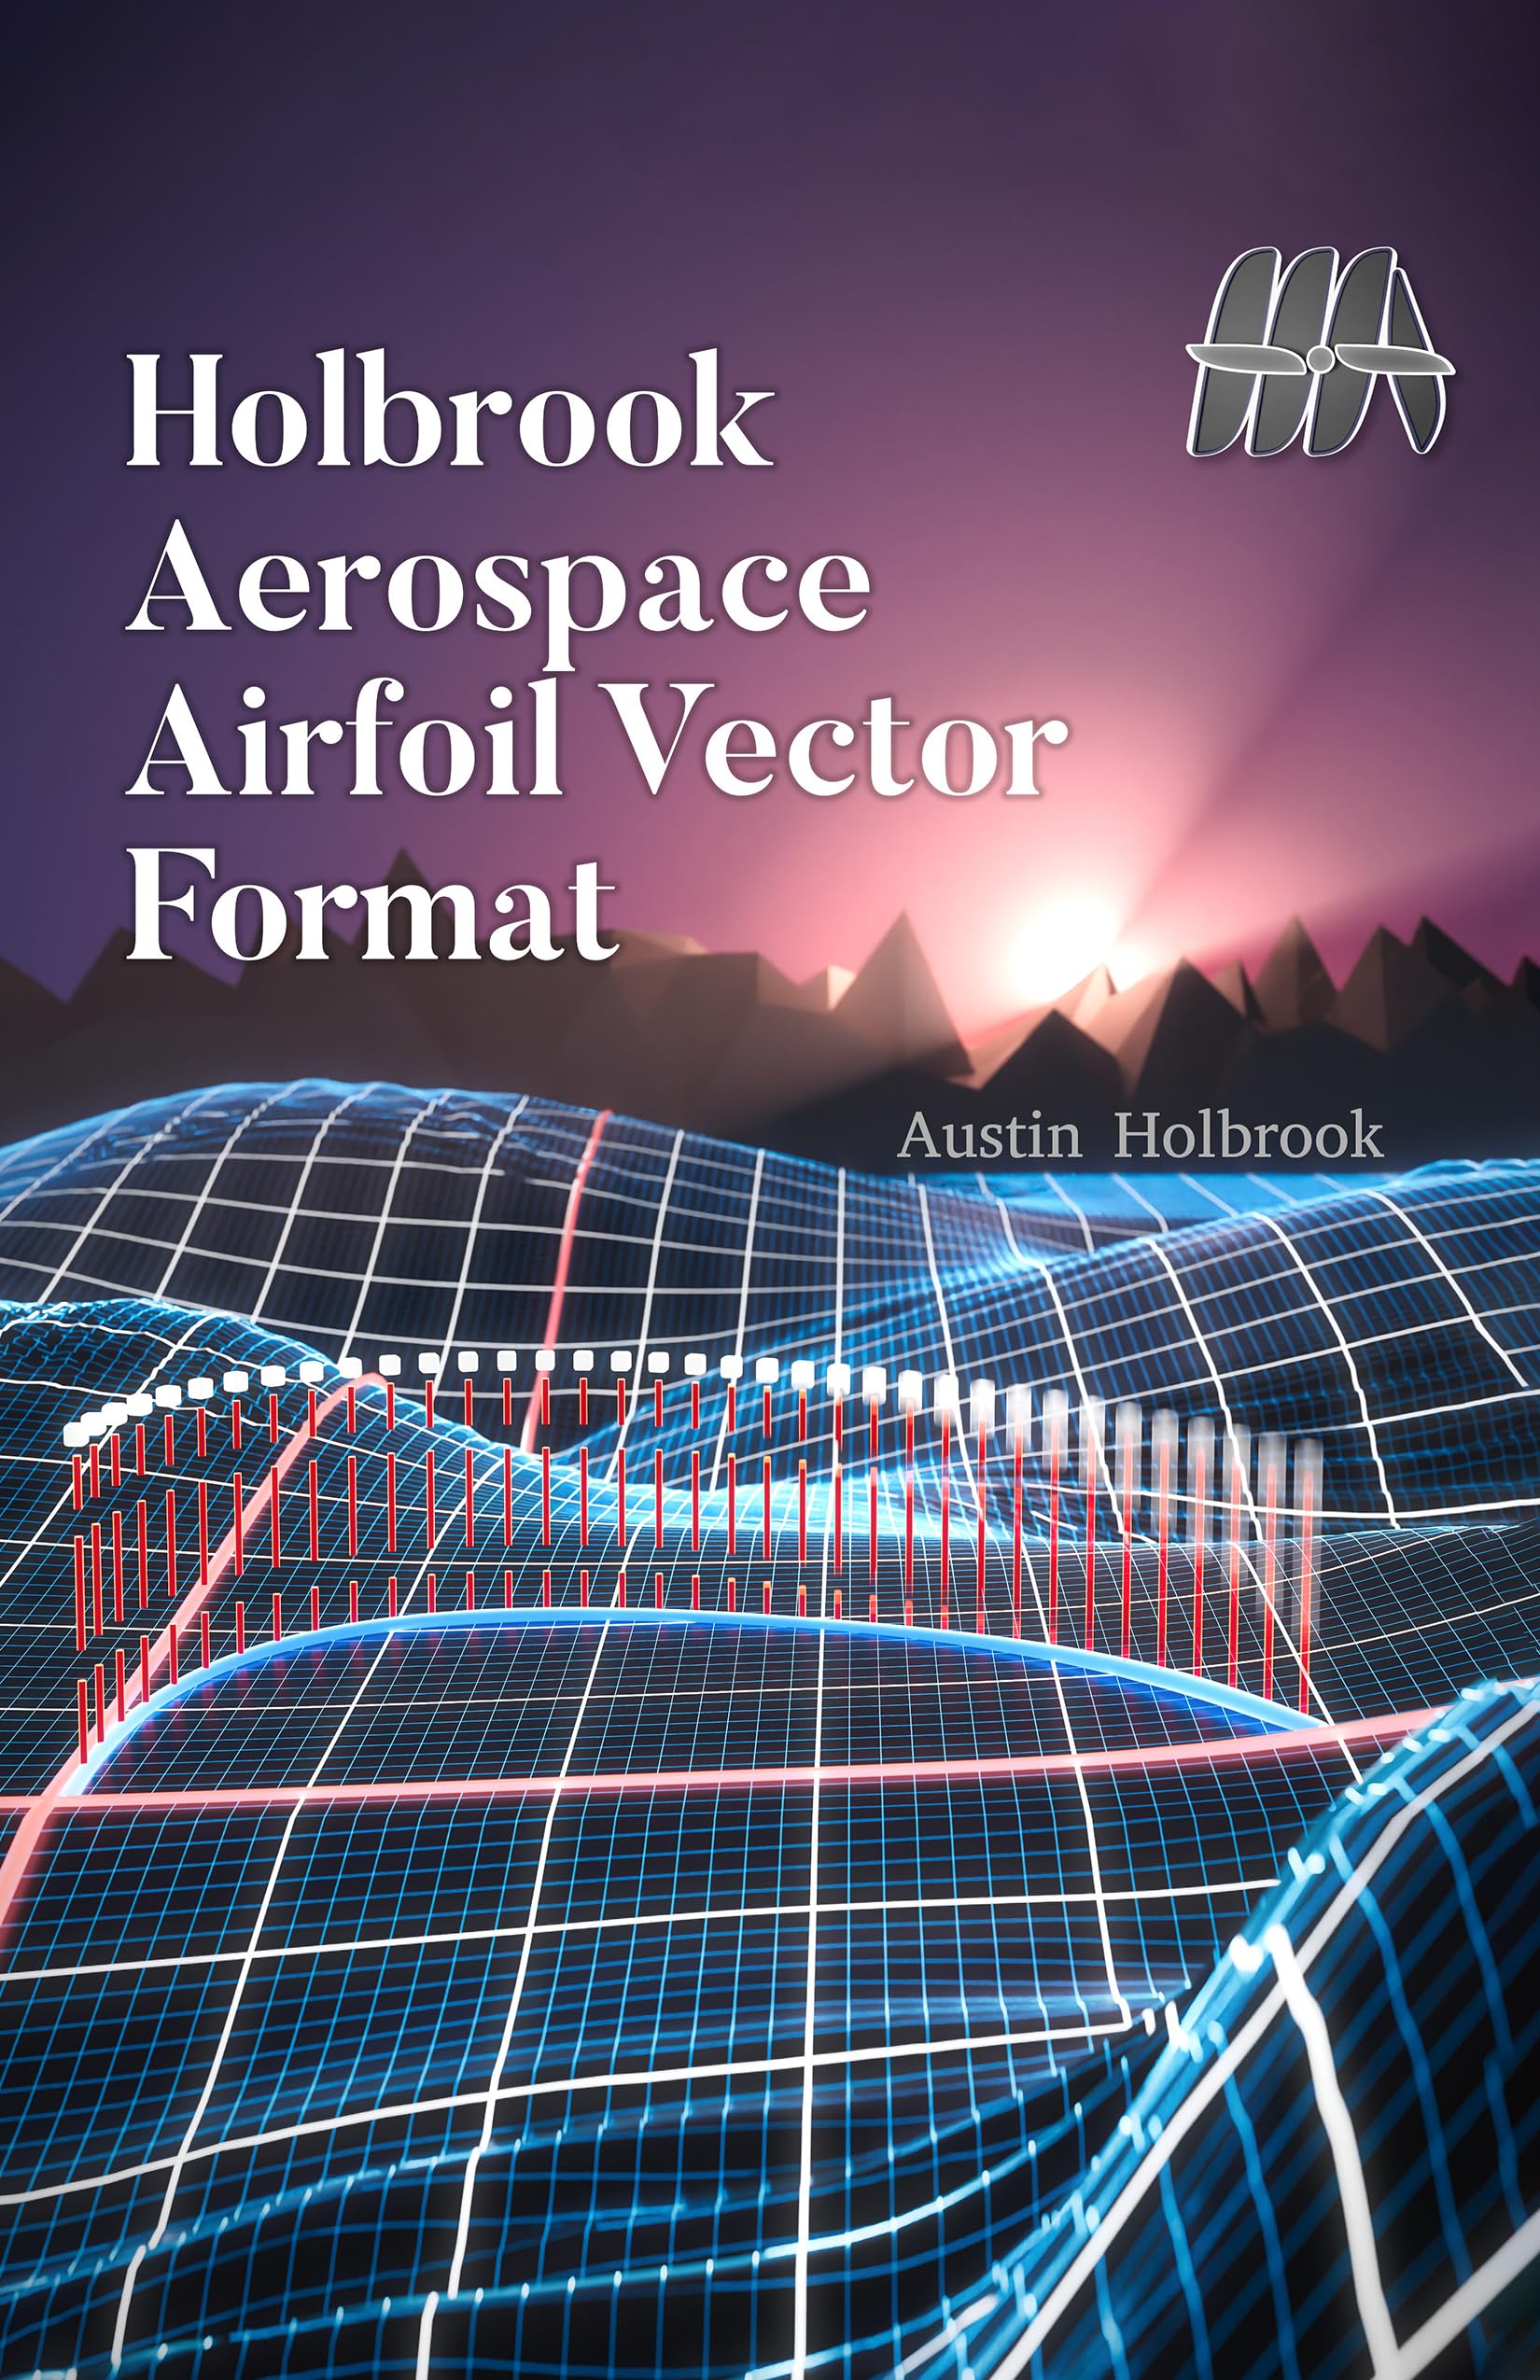 Holbook Aerospace Airfoil Vector Format